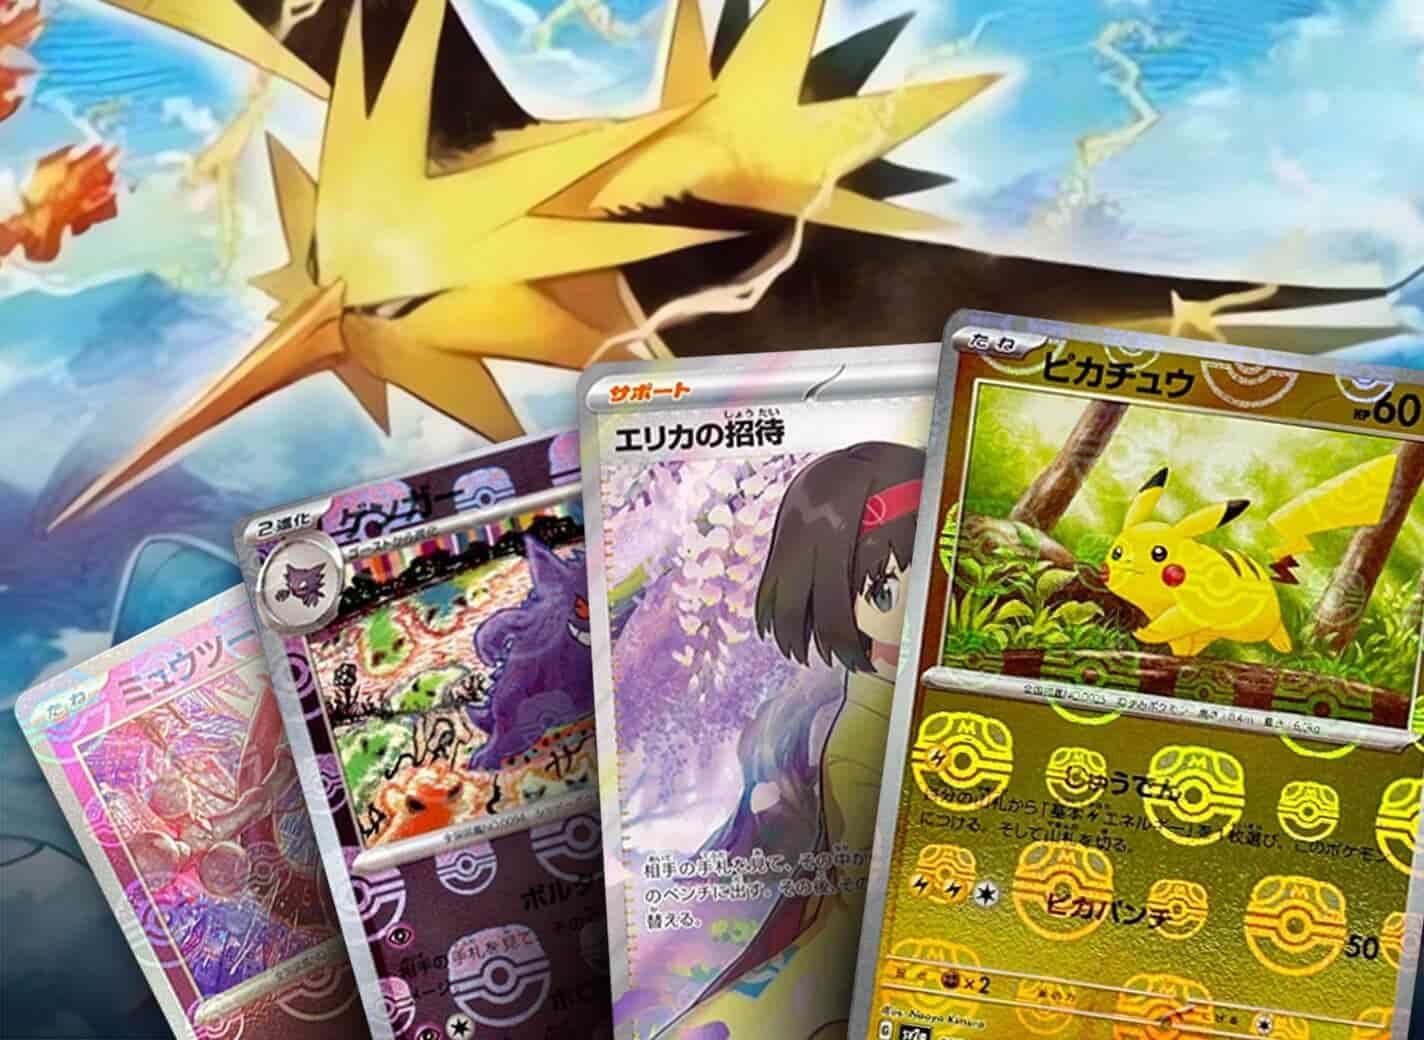 Pokémon TCG Reveals Pokémon Card 151: Bulbasaur Illustration